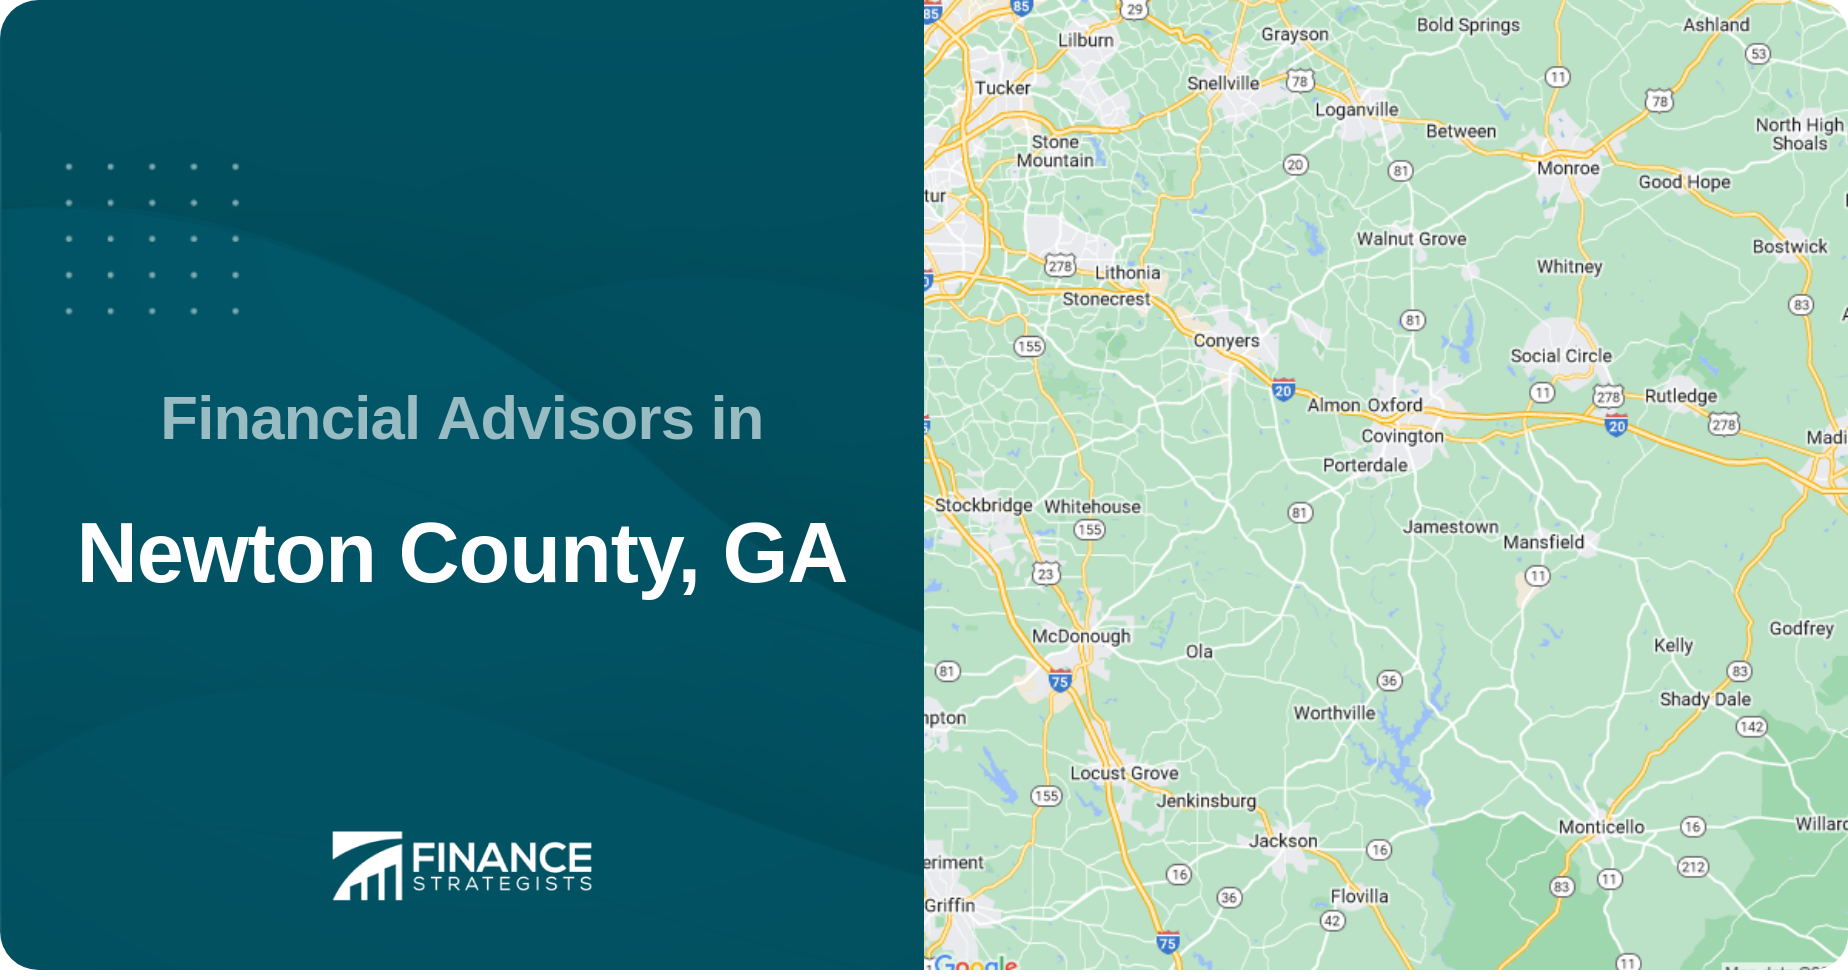 Financial Advisors in Newton County, GA